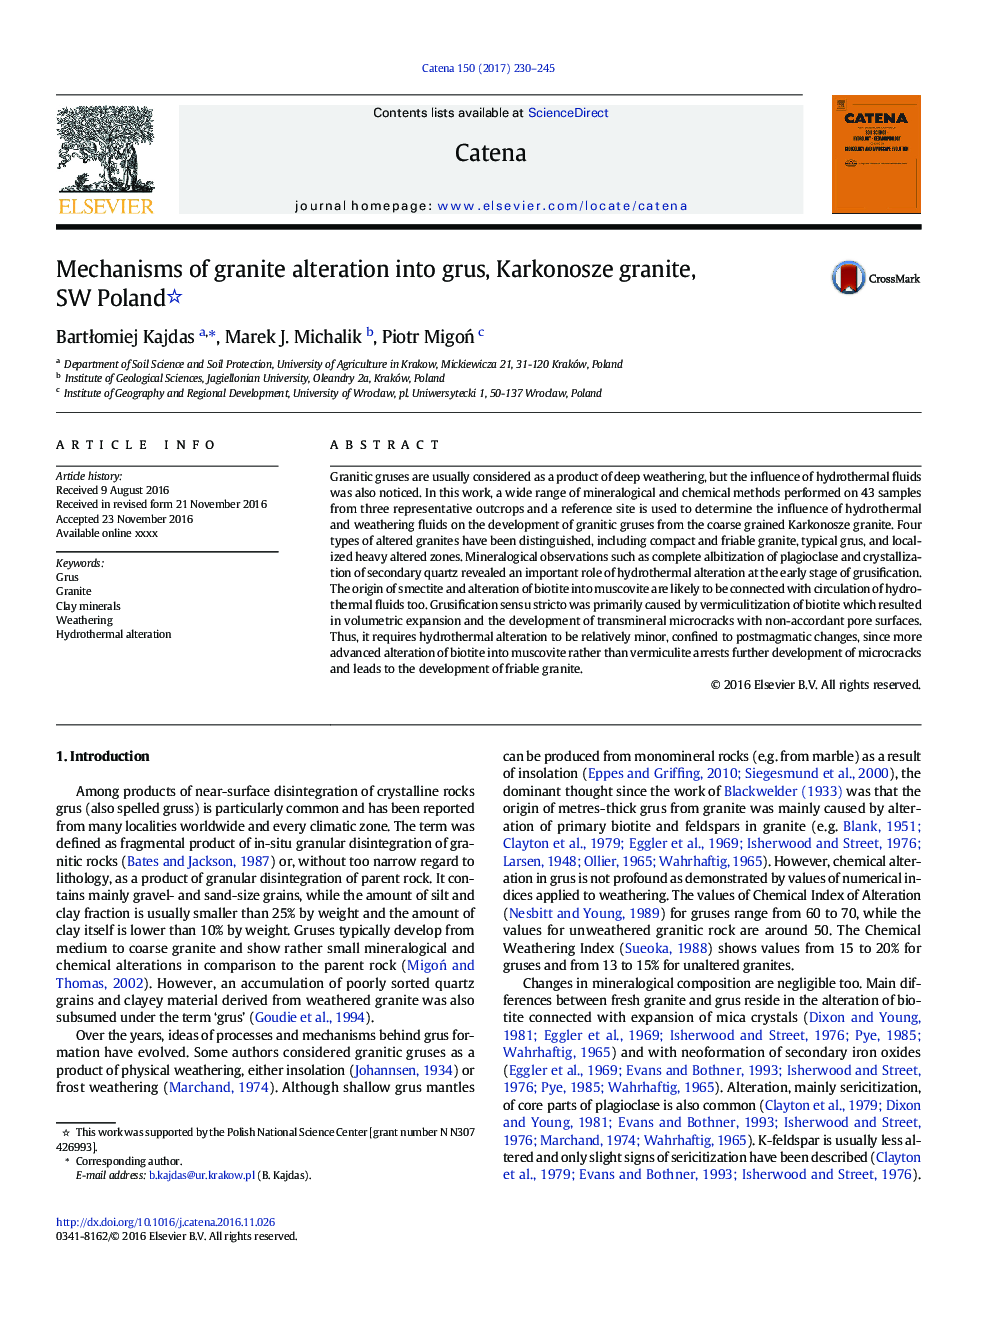 Mechanisms of granite alteration into grus, Karkonosze granite, SW Poland